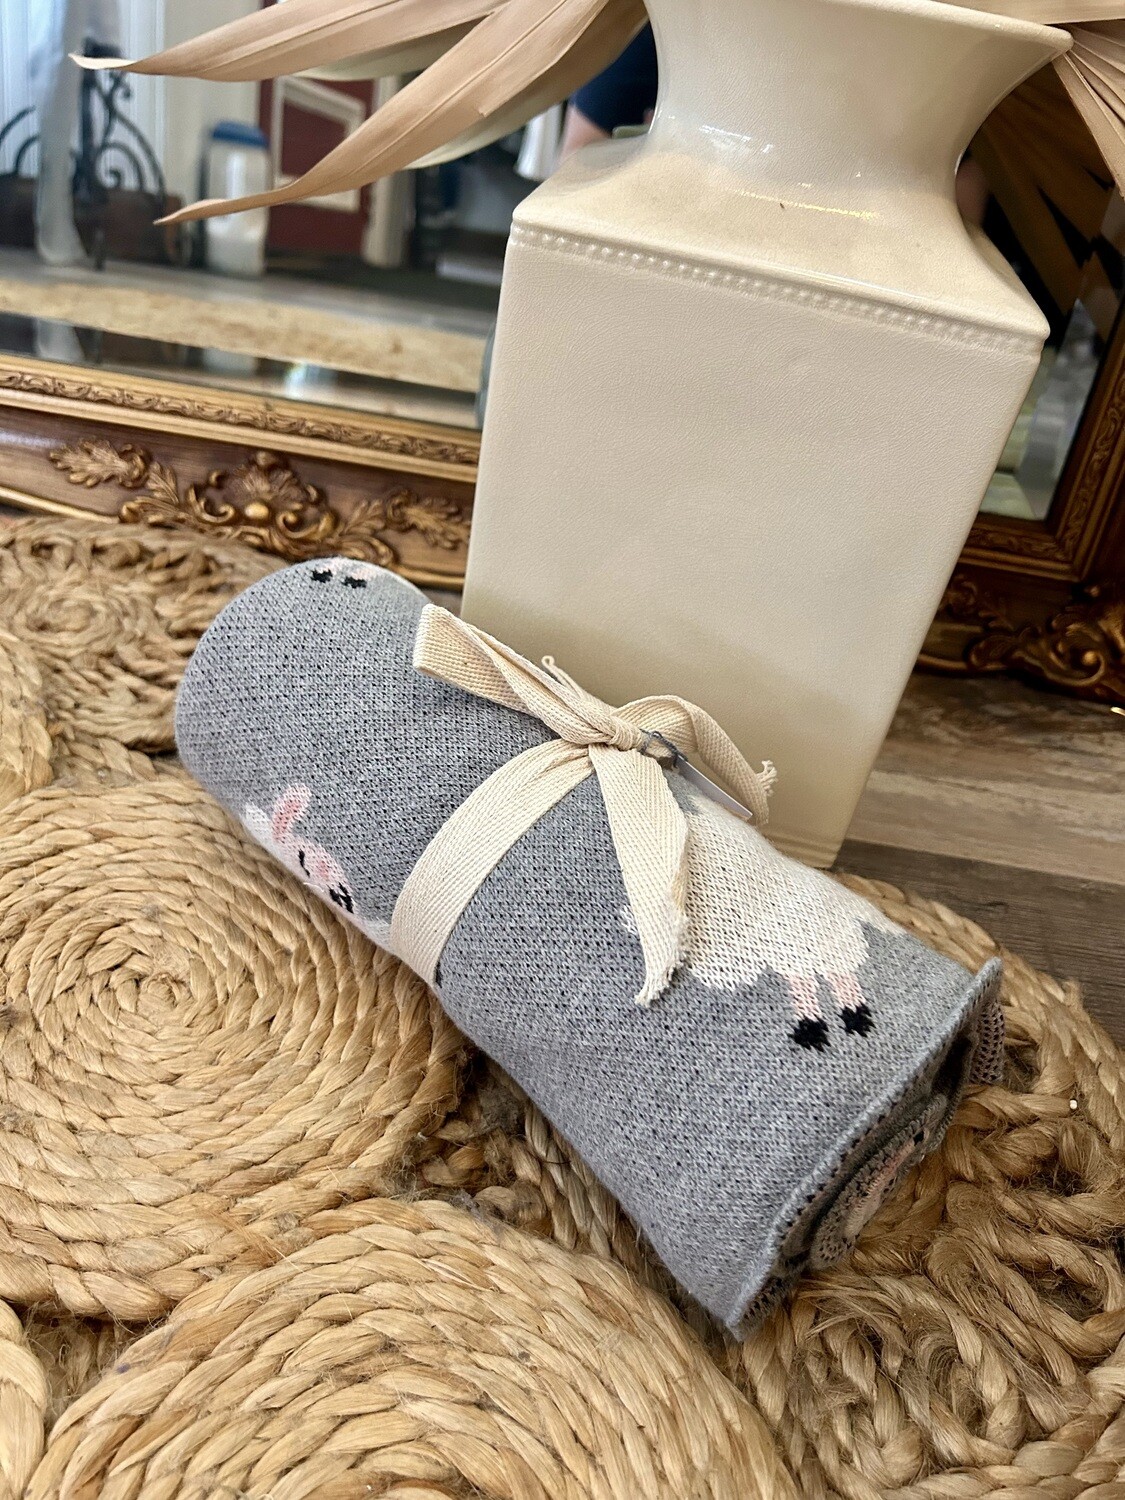 Sheep Knit Baby Blanket